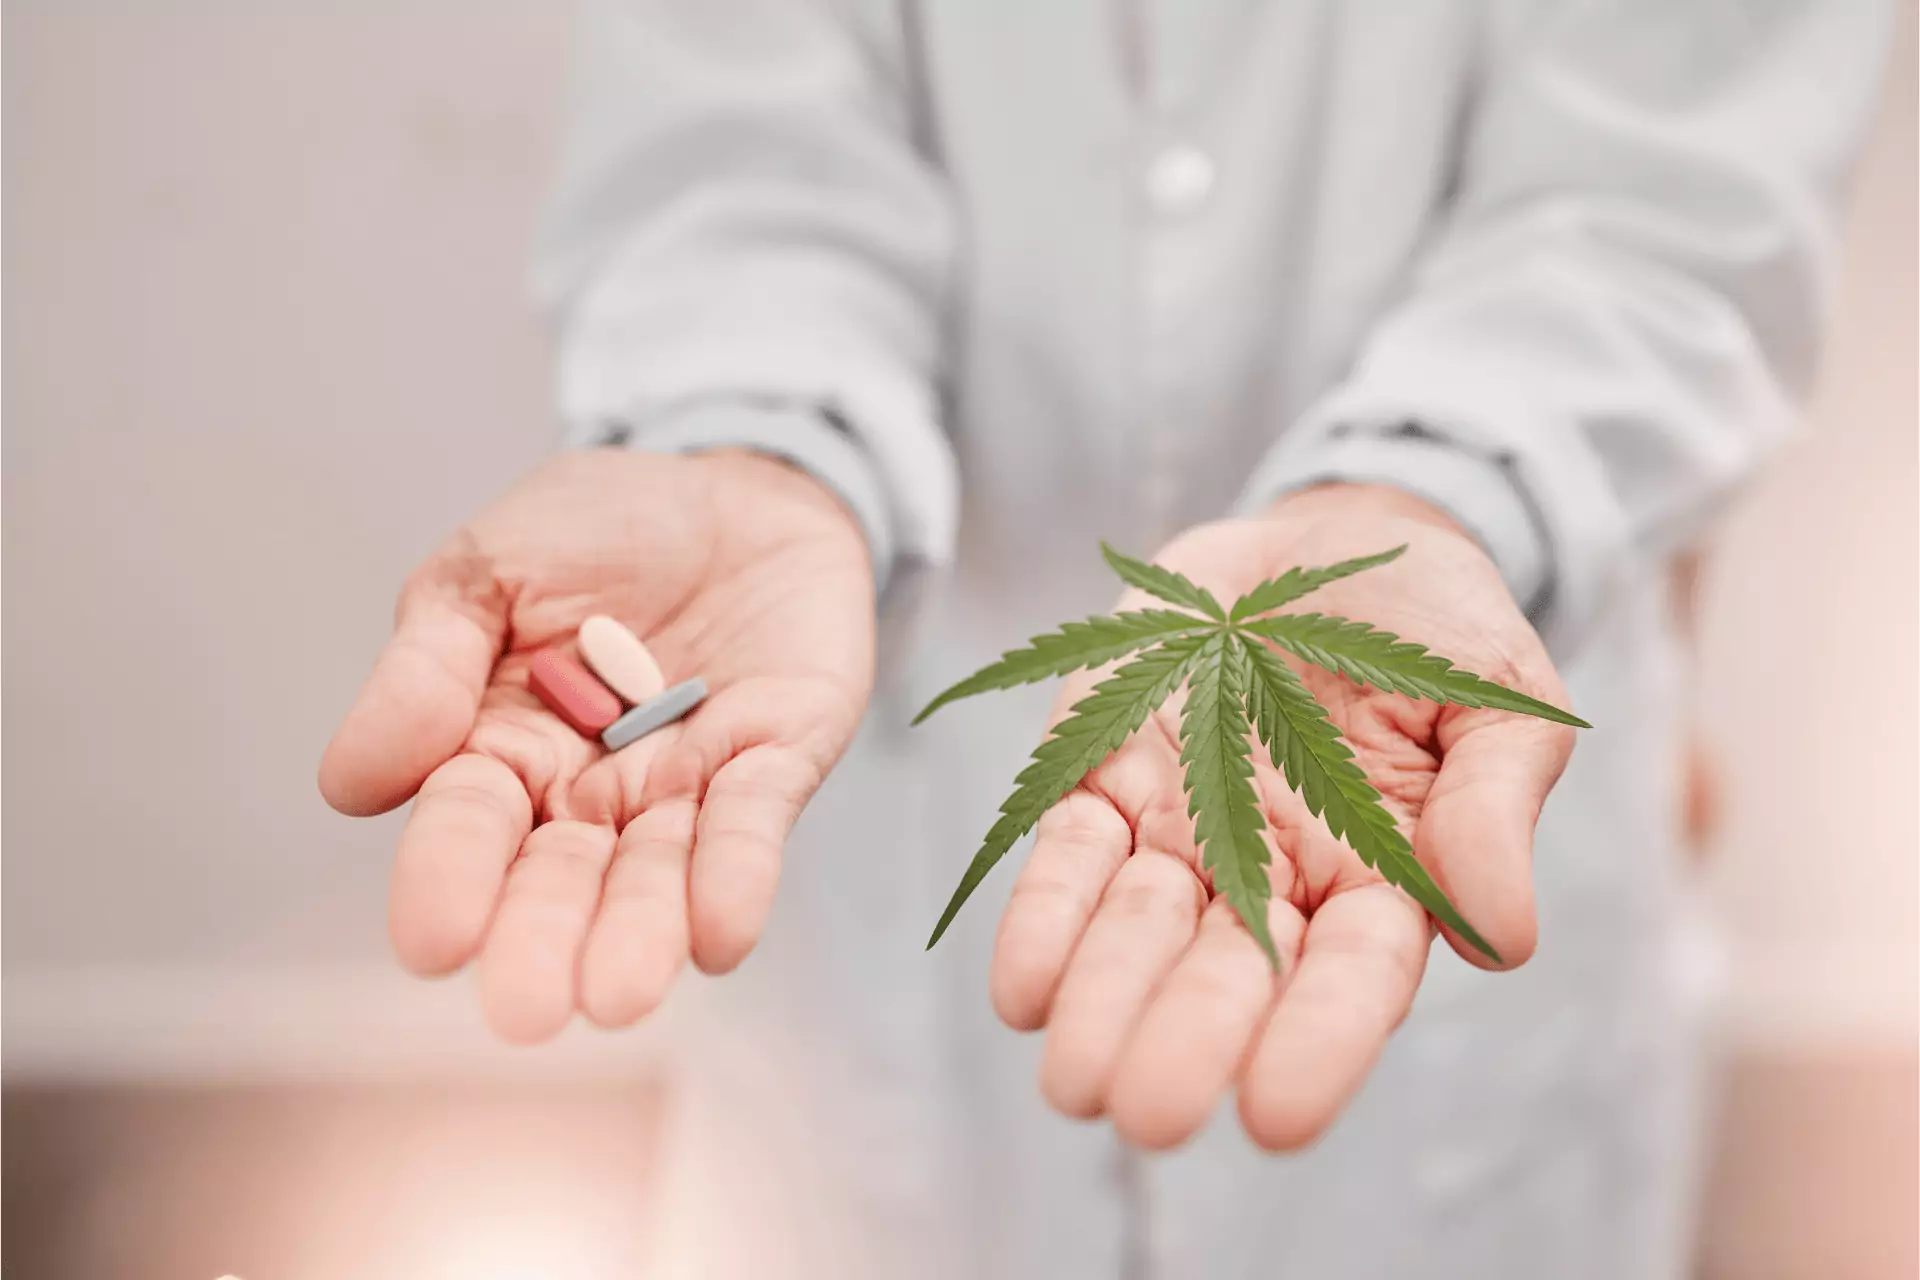 has medical marijuana impacted the opioid epidemic